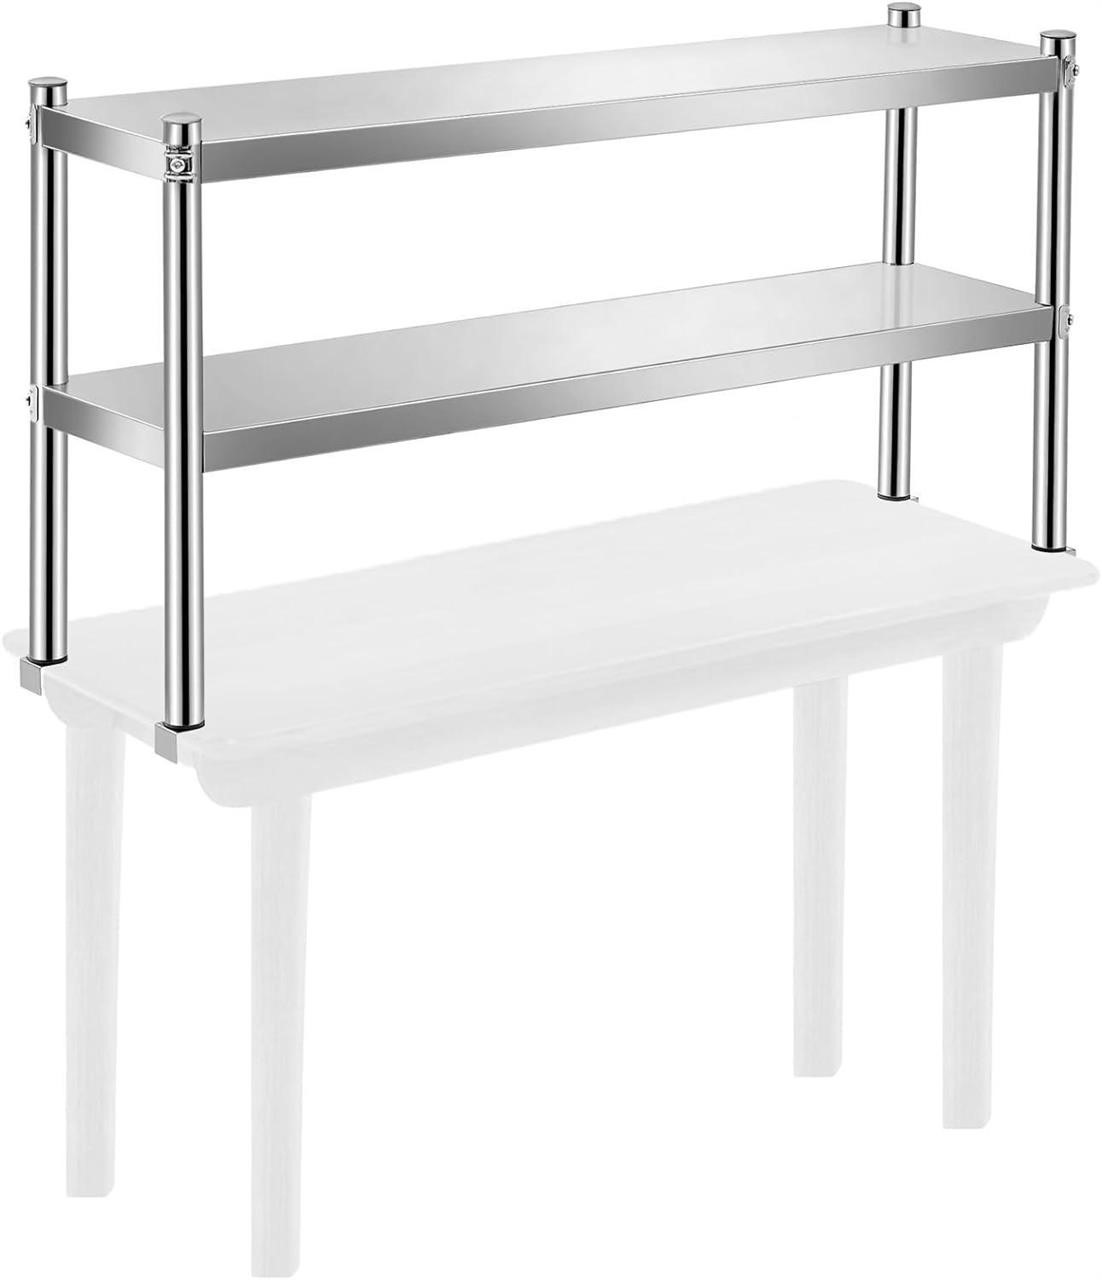 Yaocom 12x48" Steel Double Shelf